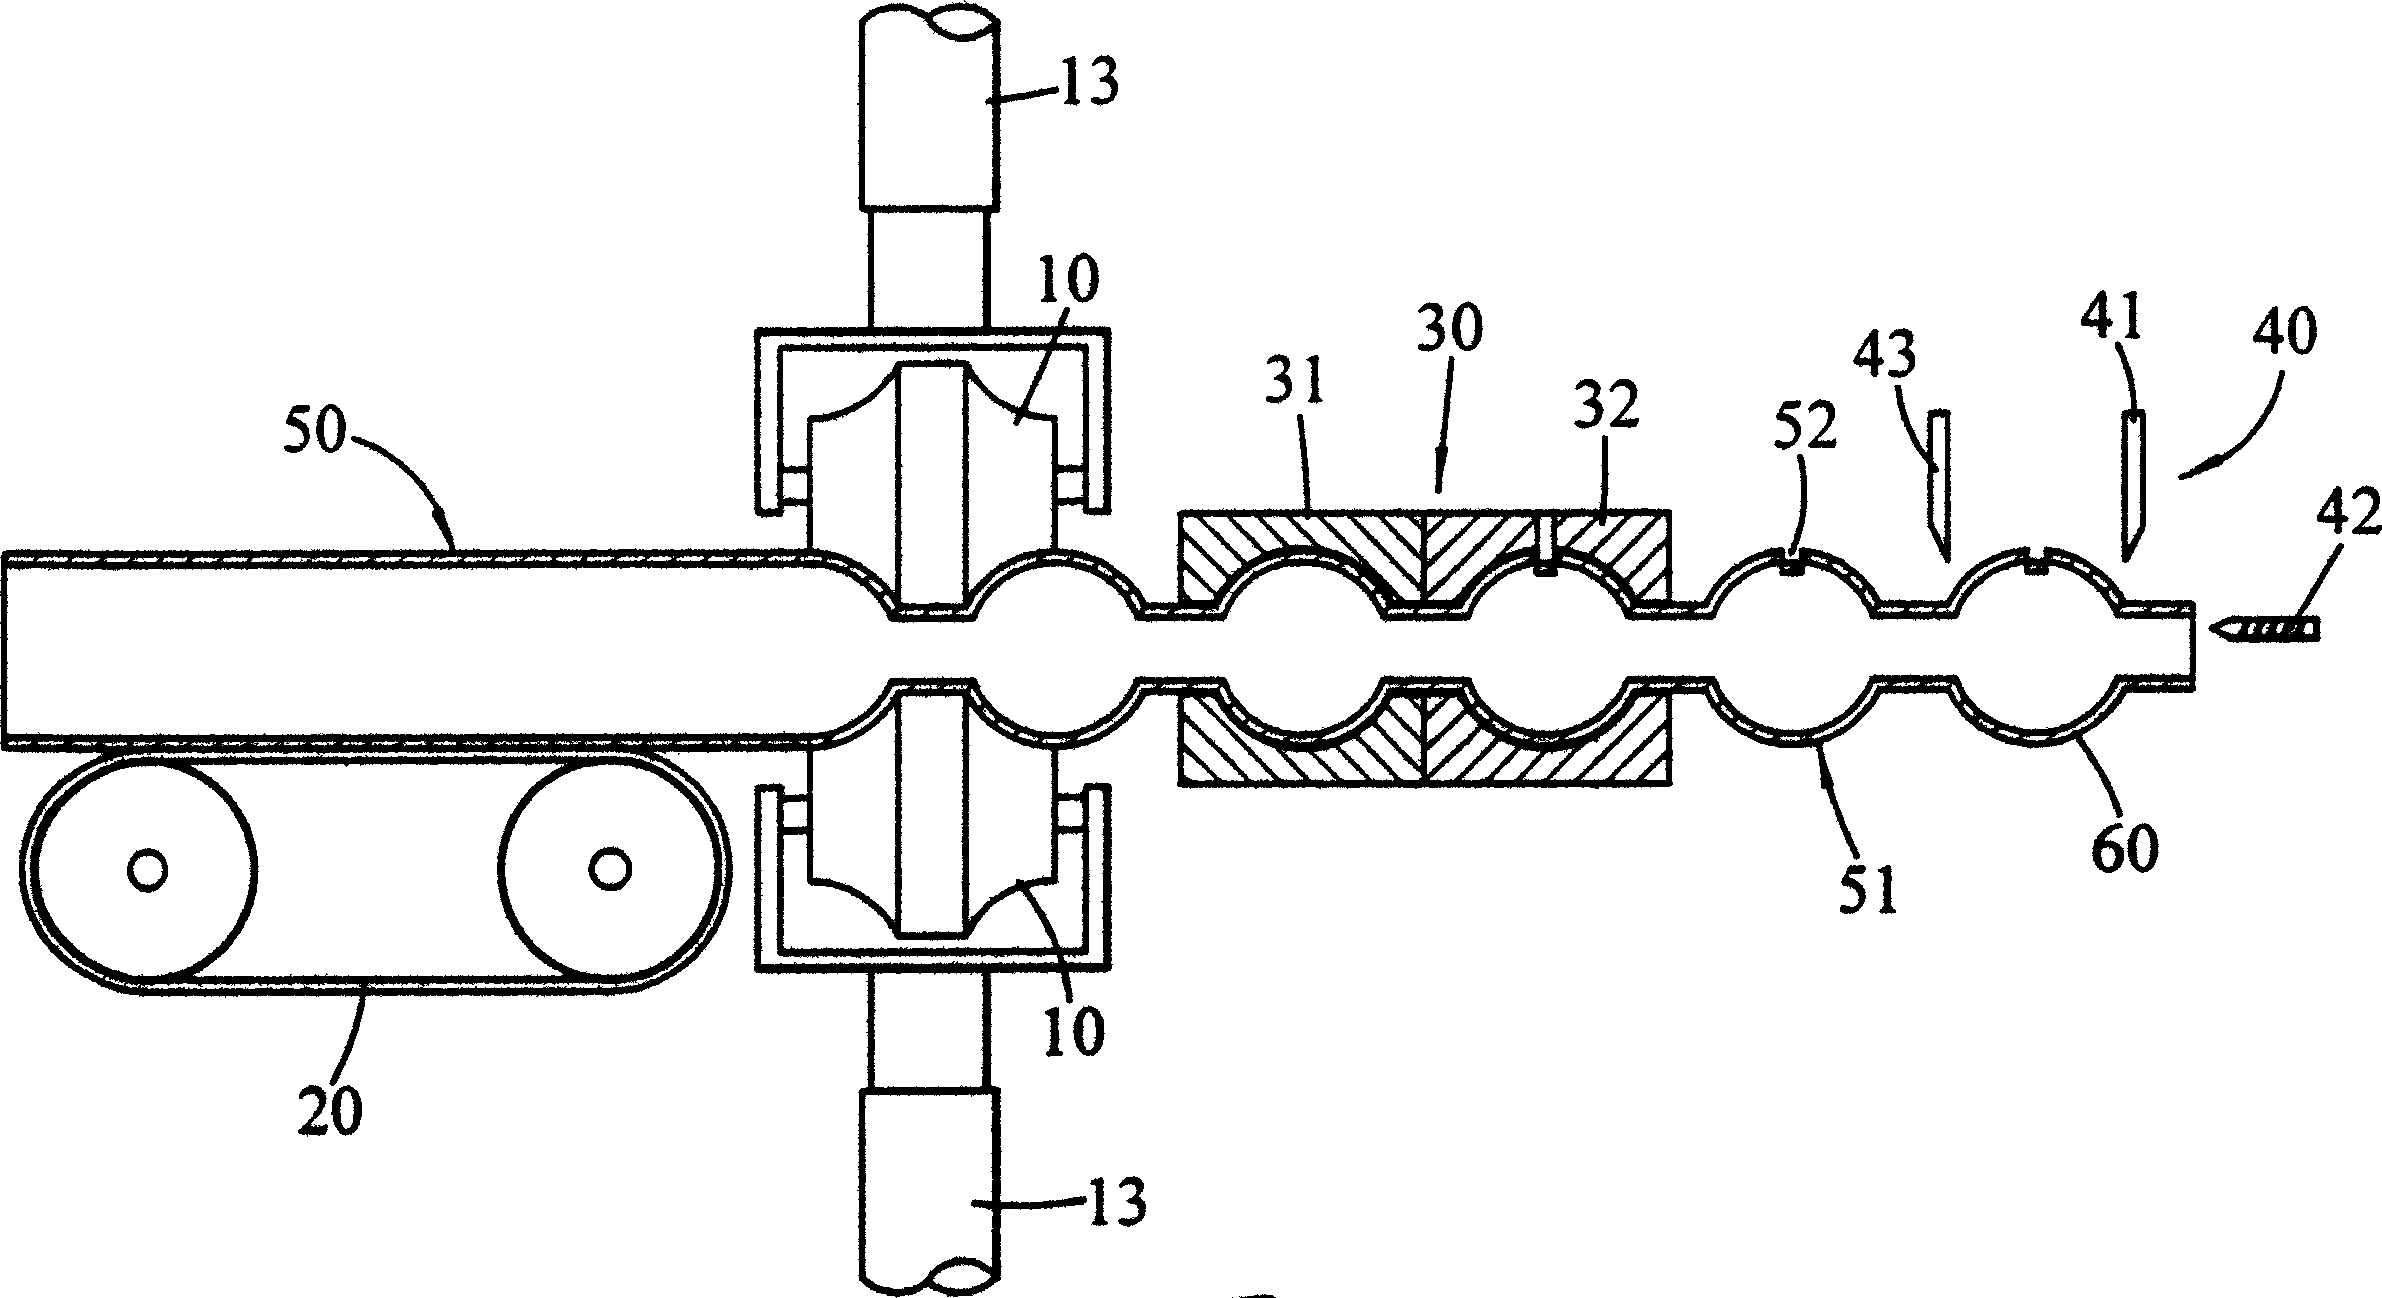 Method for producing ball valve body